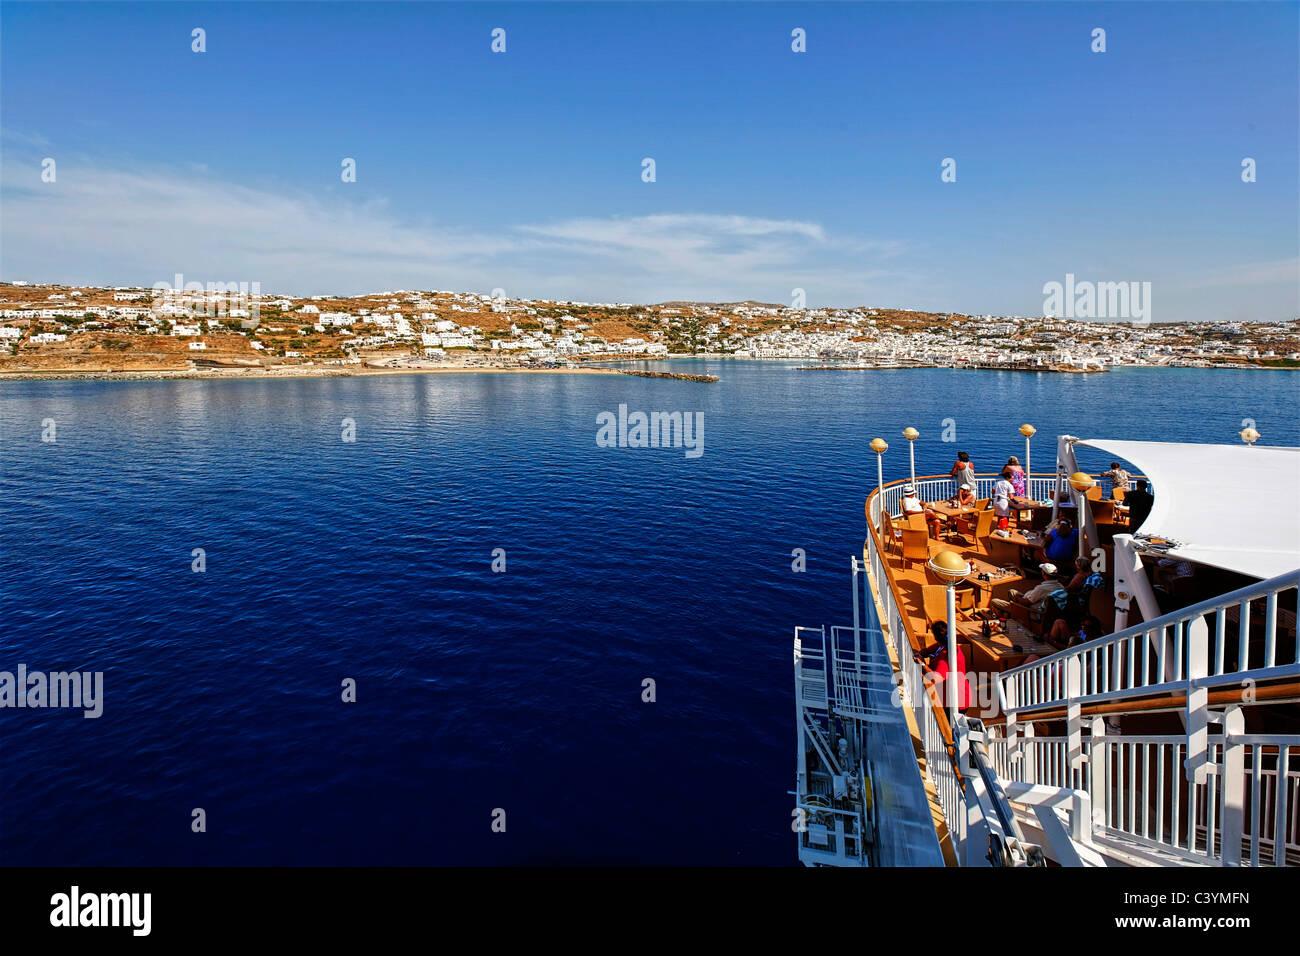 Greece, Mykonos, NCL, Norwegian Cruise Line, cruise ship, Norwegian Gem, leaving port, sailing away, departing, departure, Chora Stock Photo